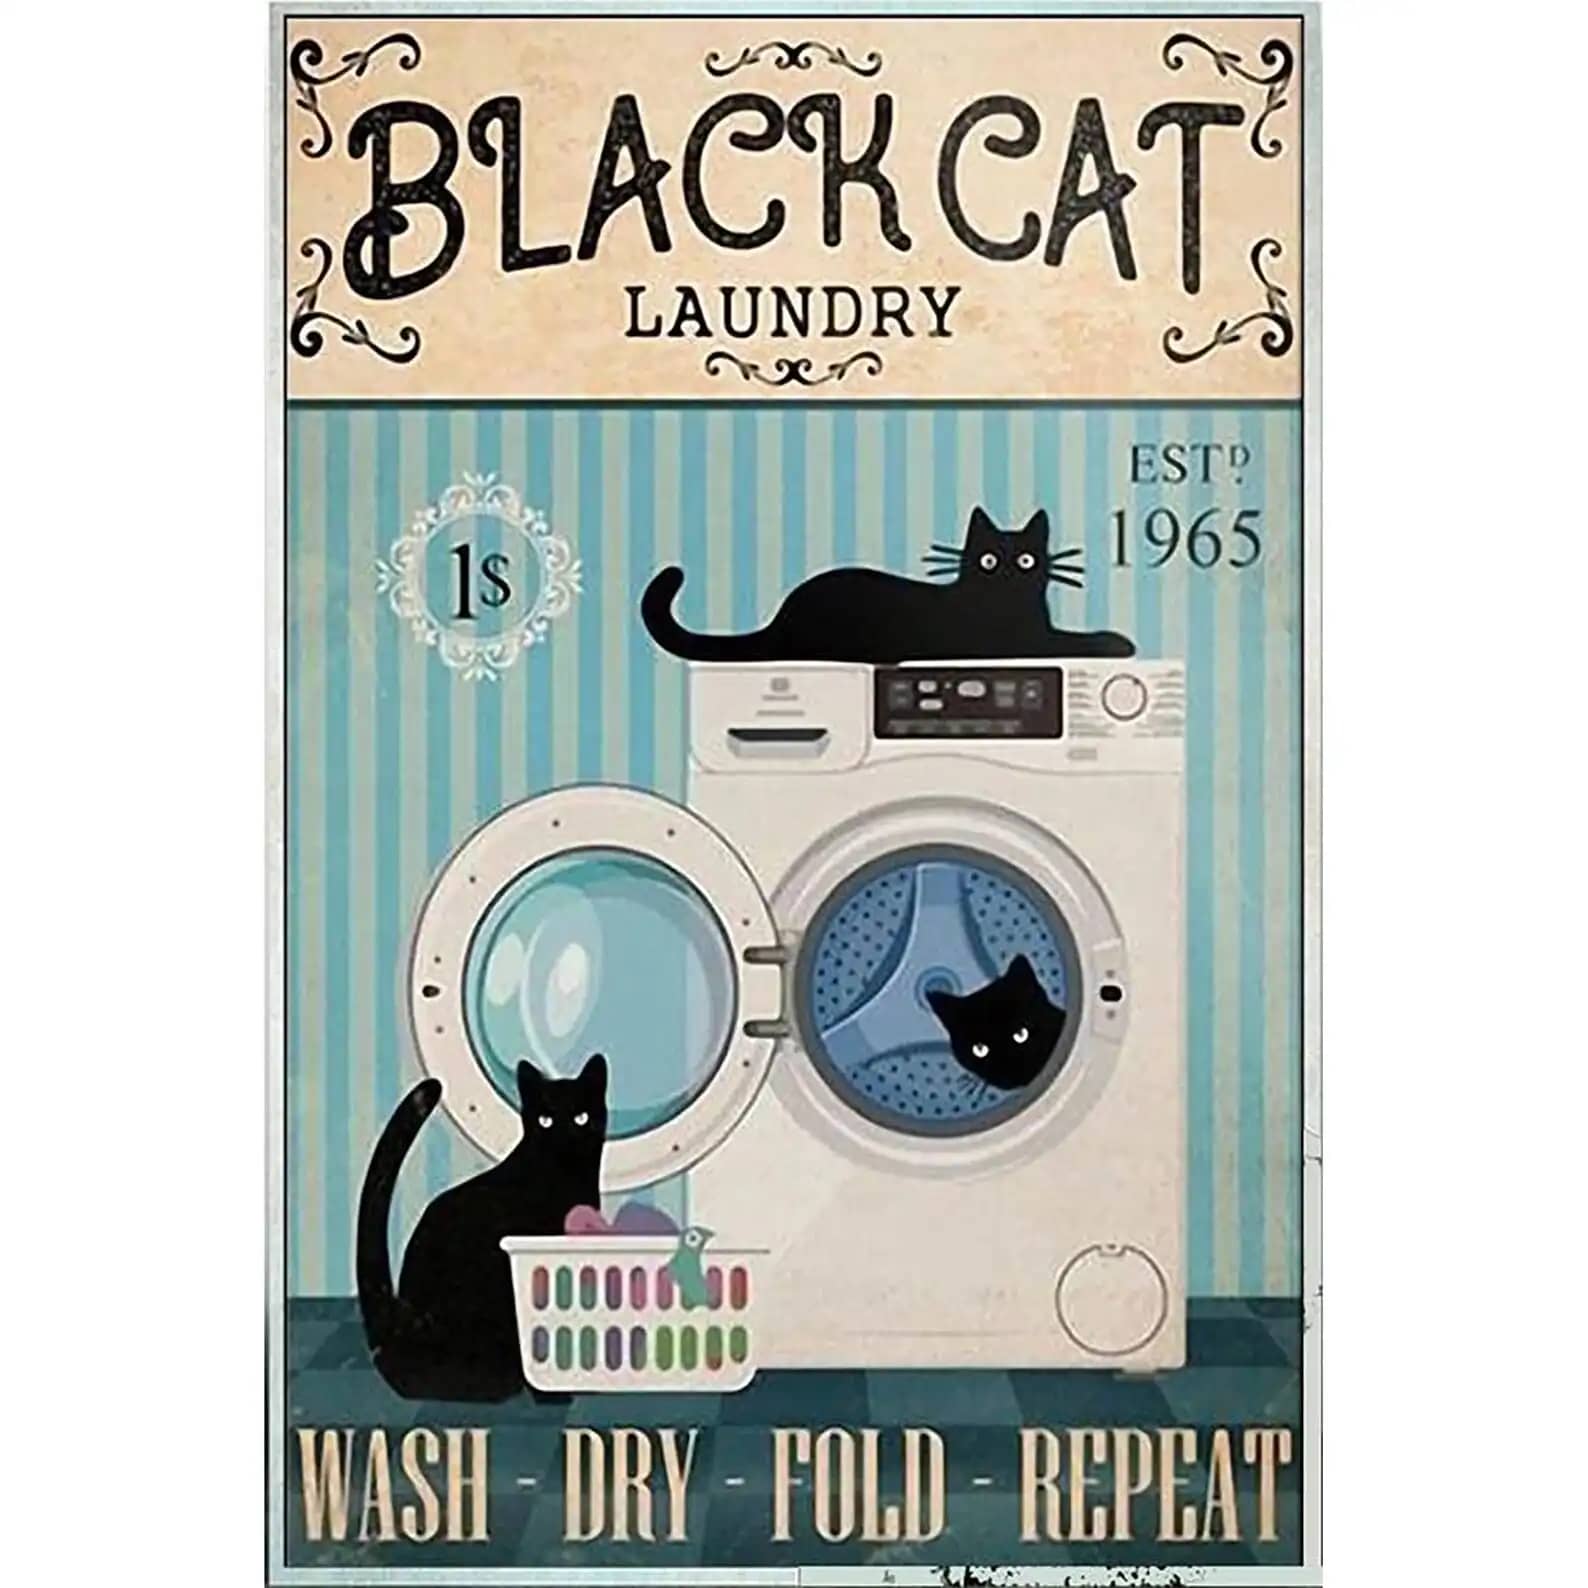 Wall Decor Black Cat Laundry Wash Dry Fold Repeat - Laundry Room Decor, Home Decor Metal Sign